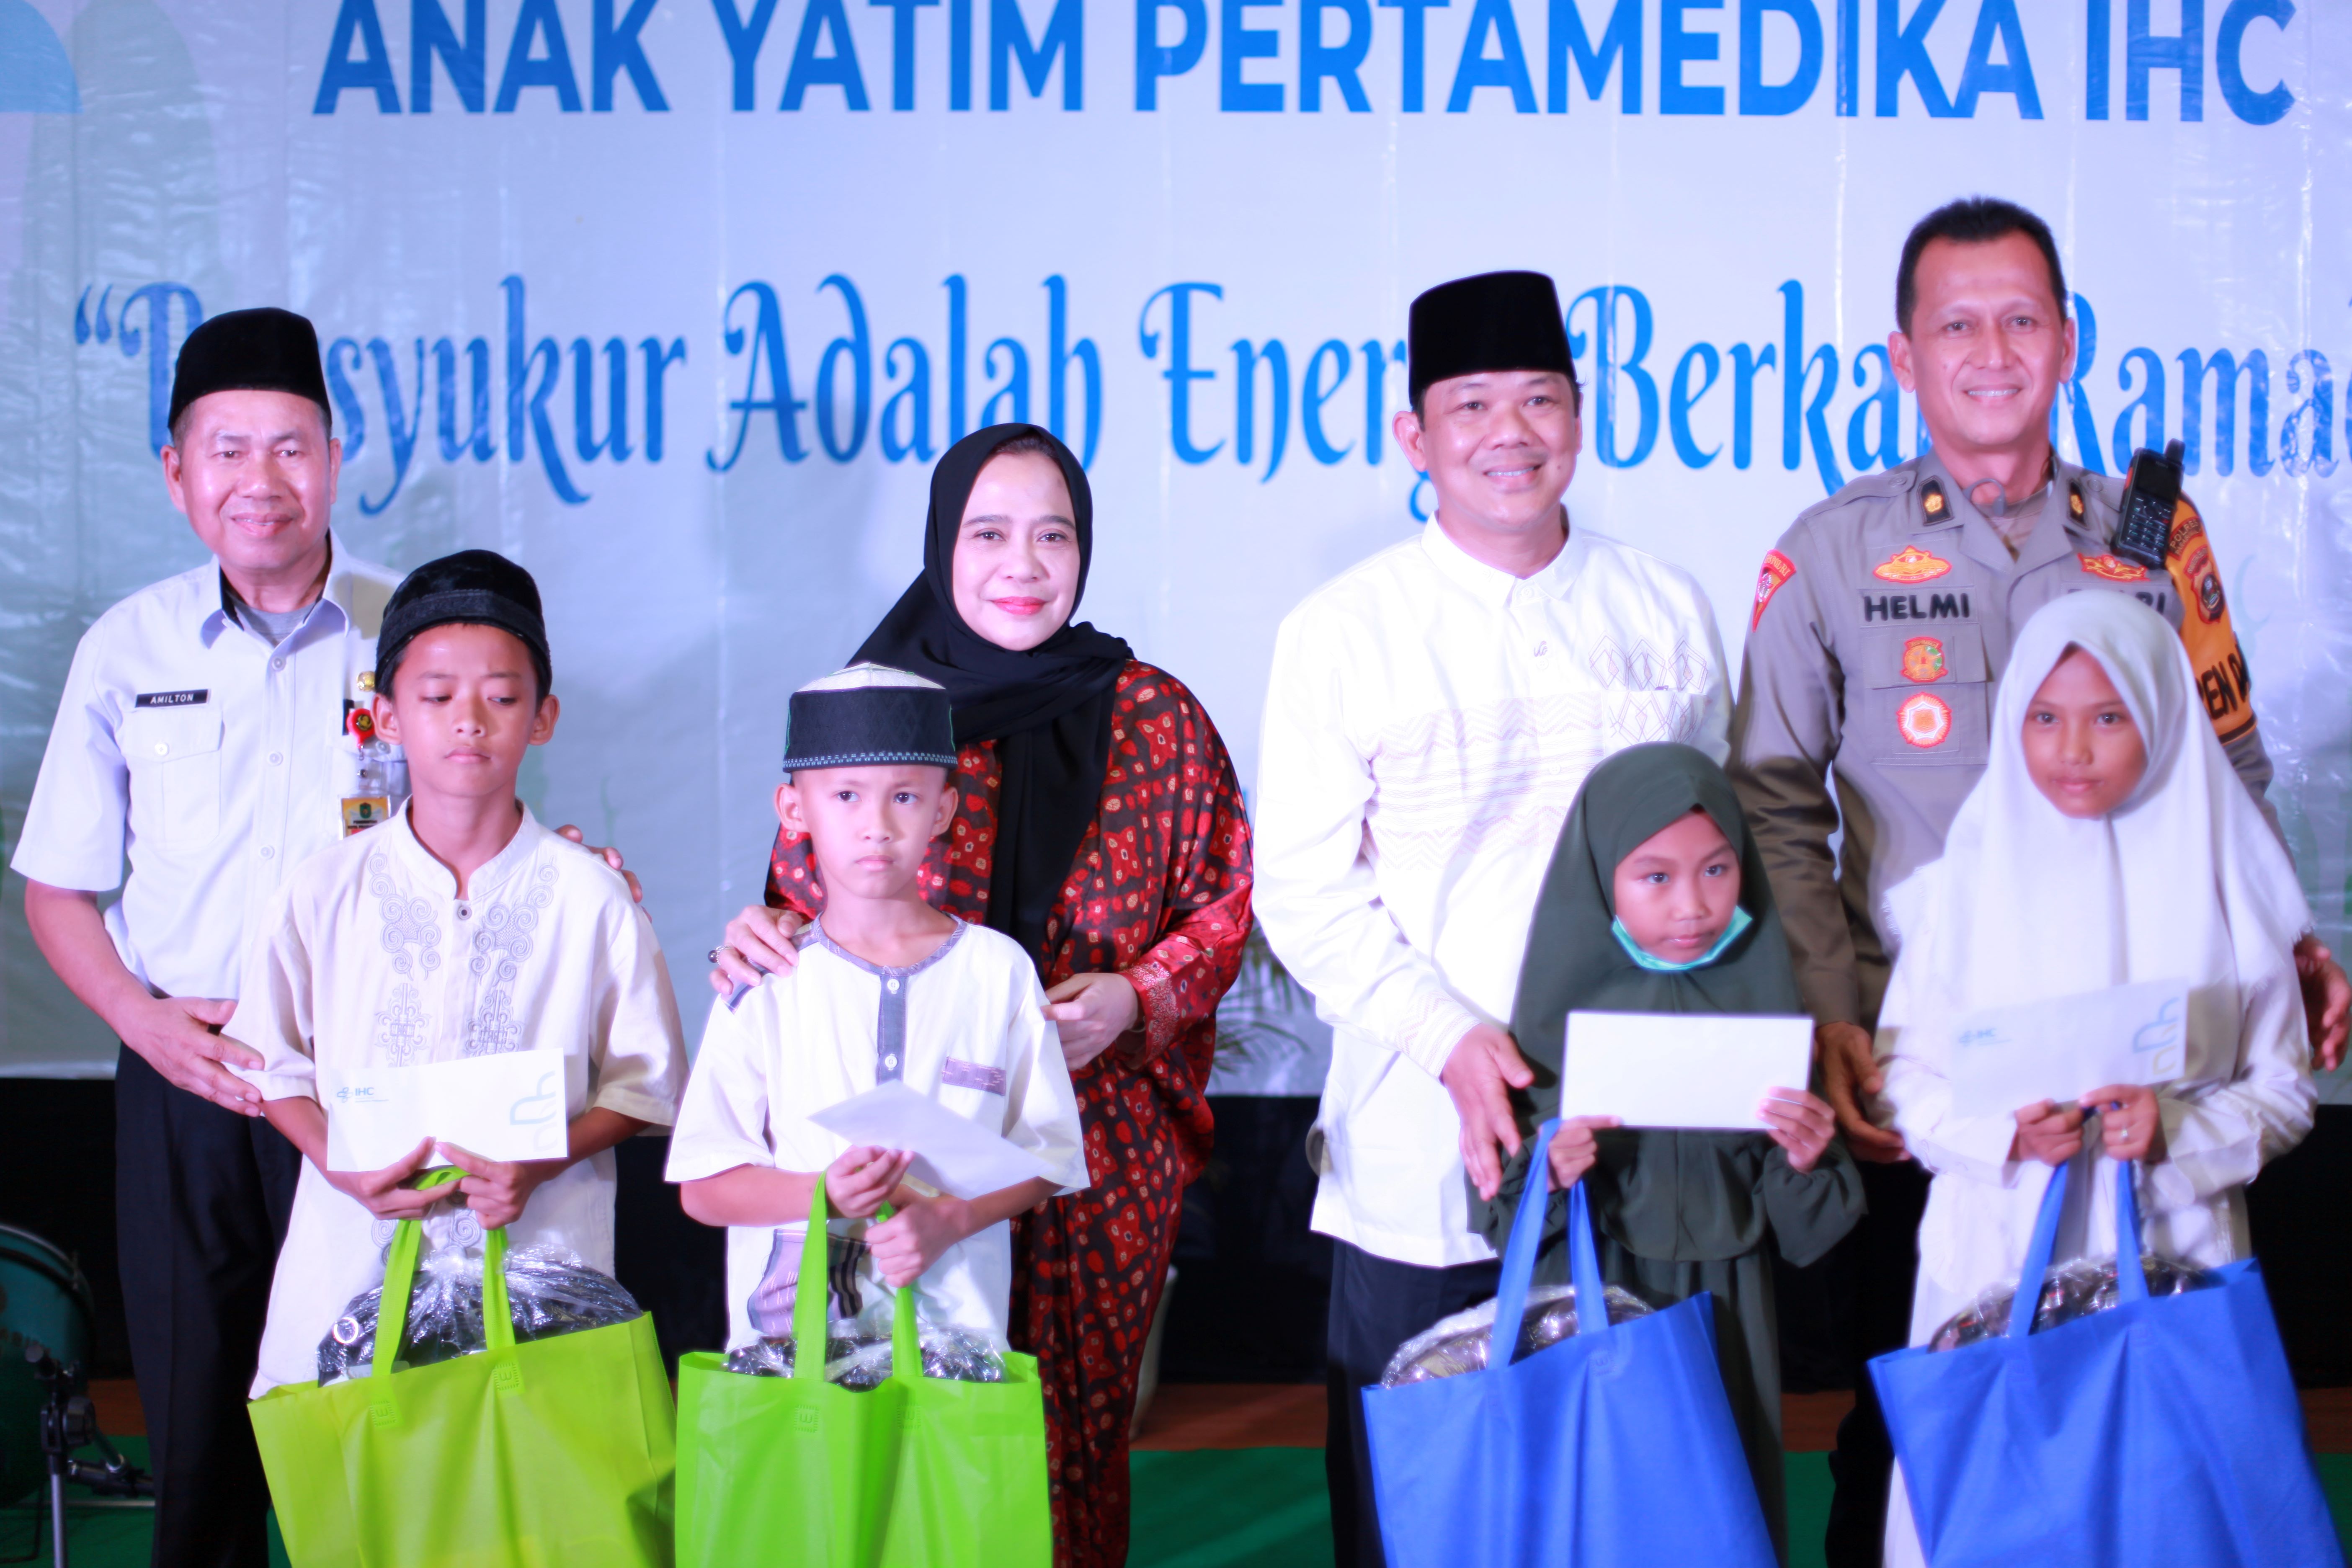 Safari Ramadan, Pertamedika IHC Gelar Bukber dan Santunan 100 Anak Yatim di Prabumulih